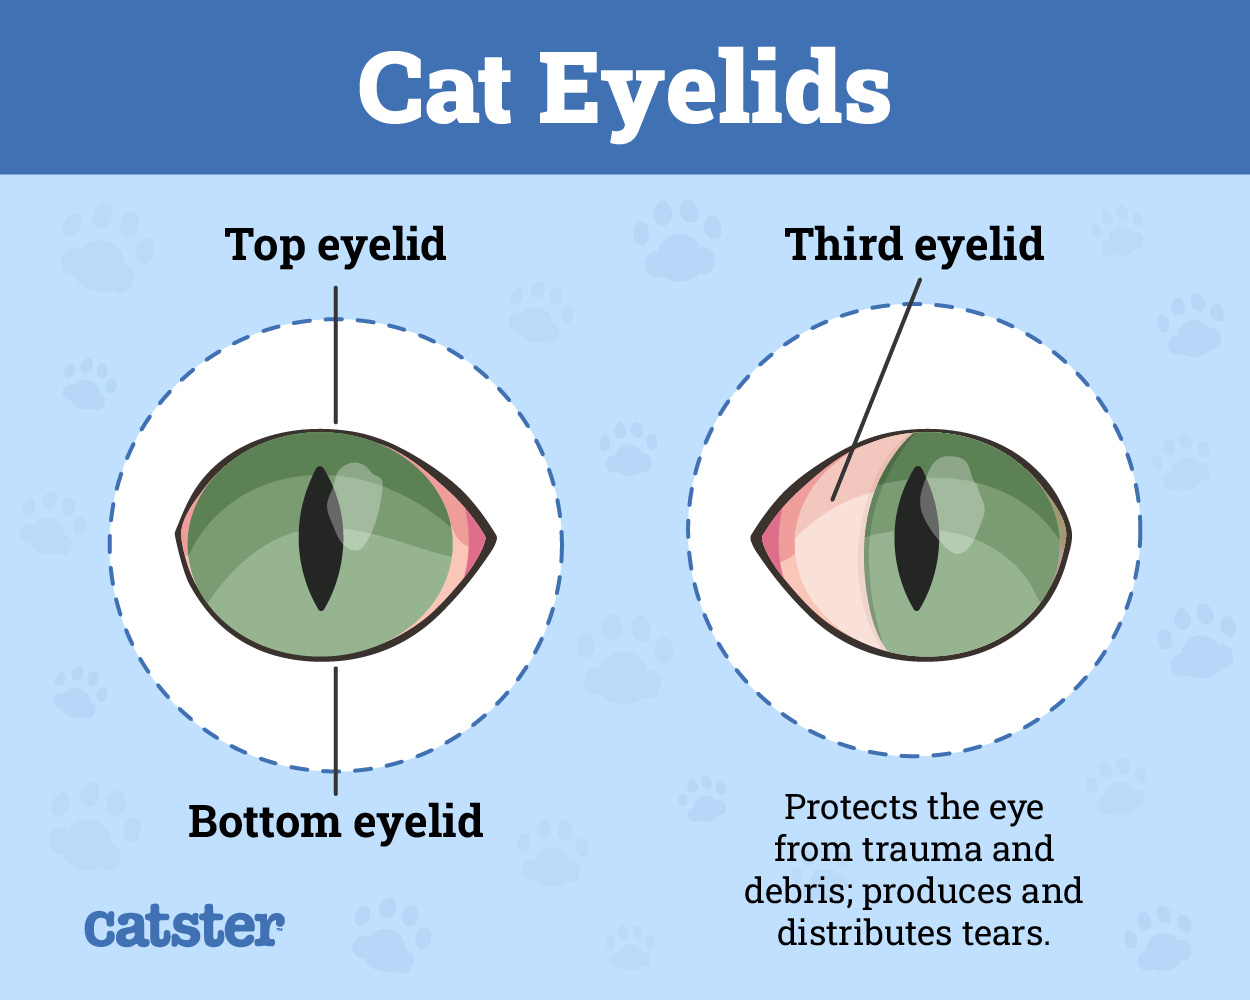 Cat Eyelids